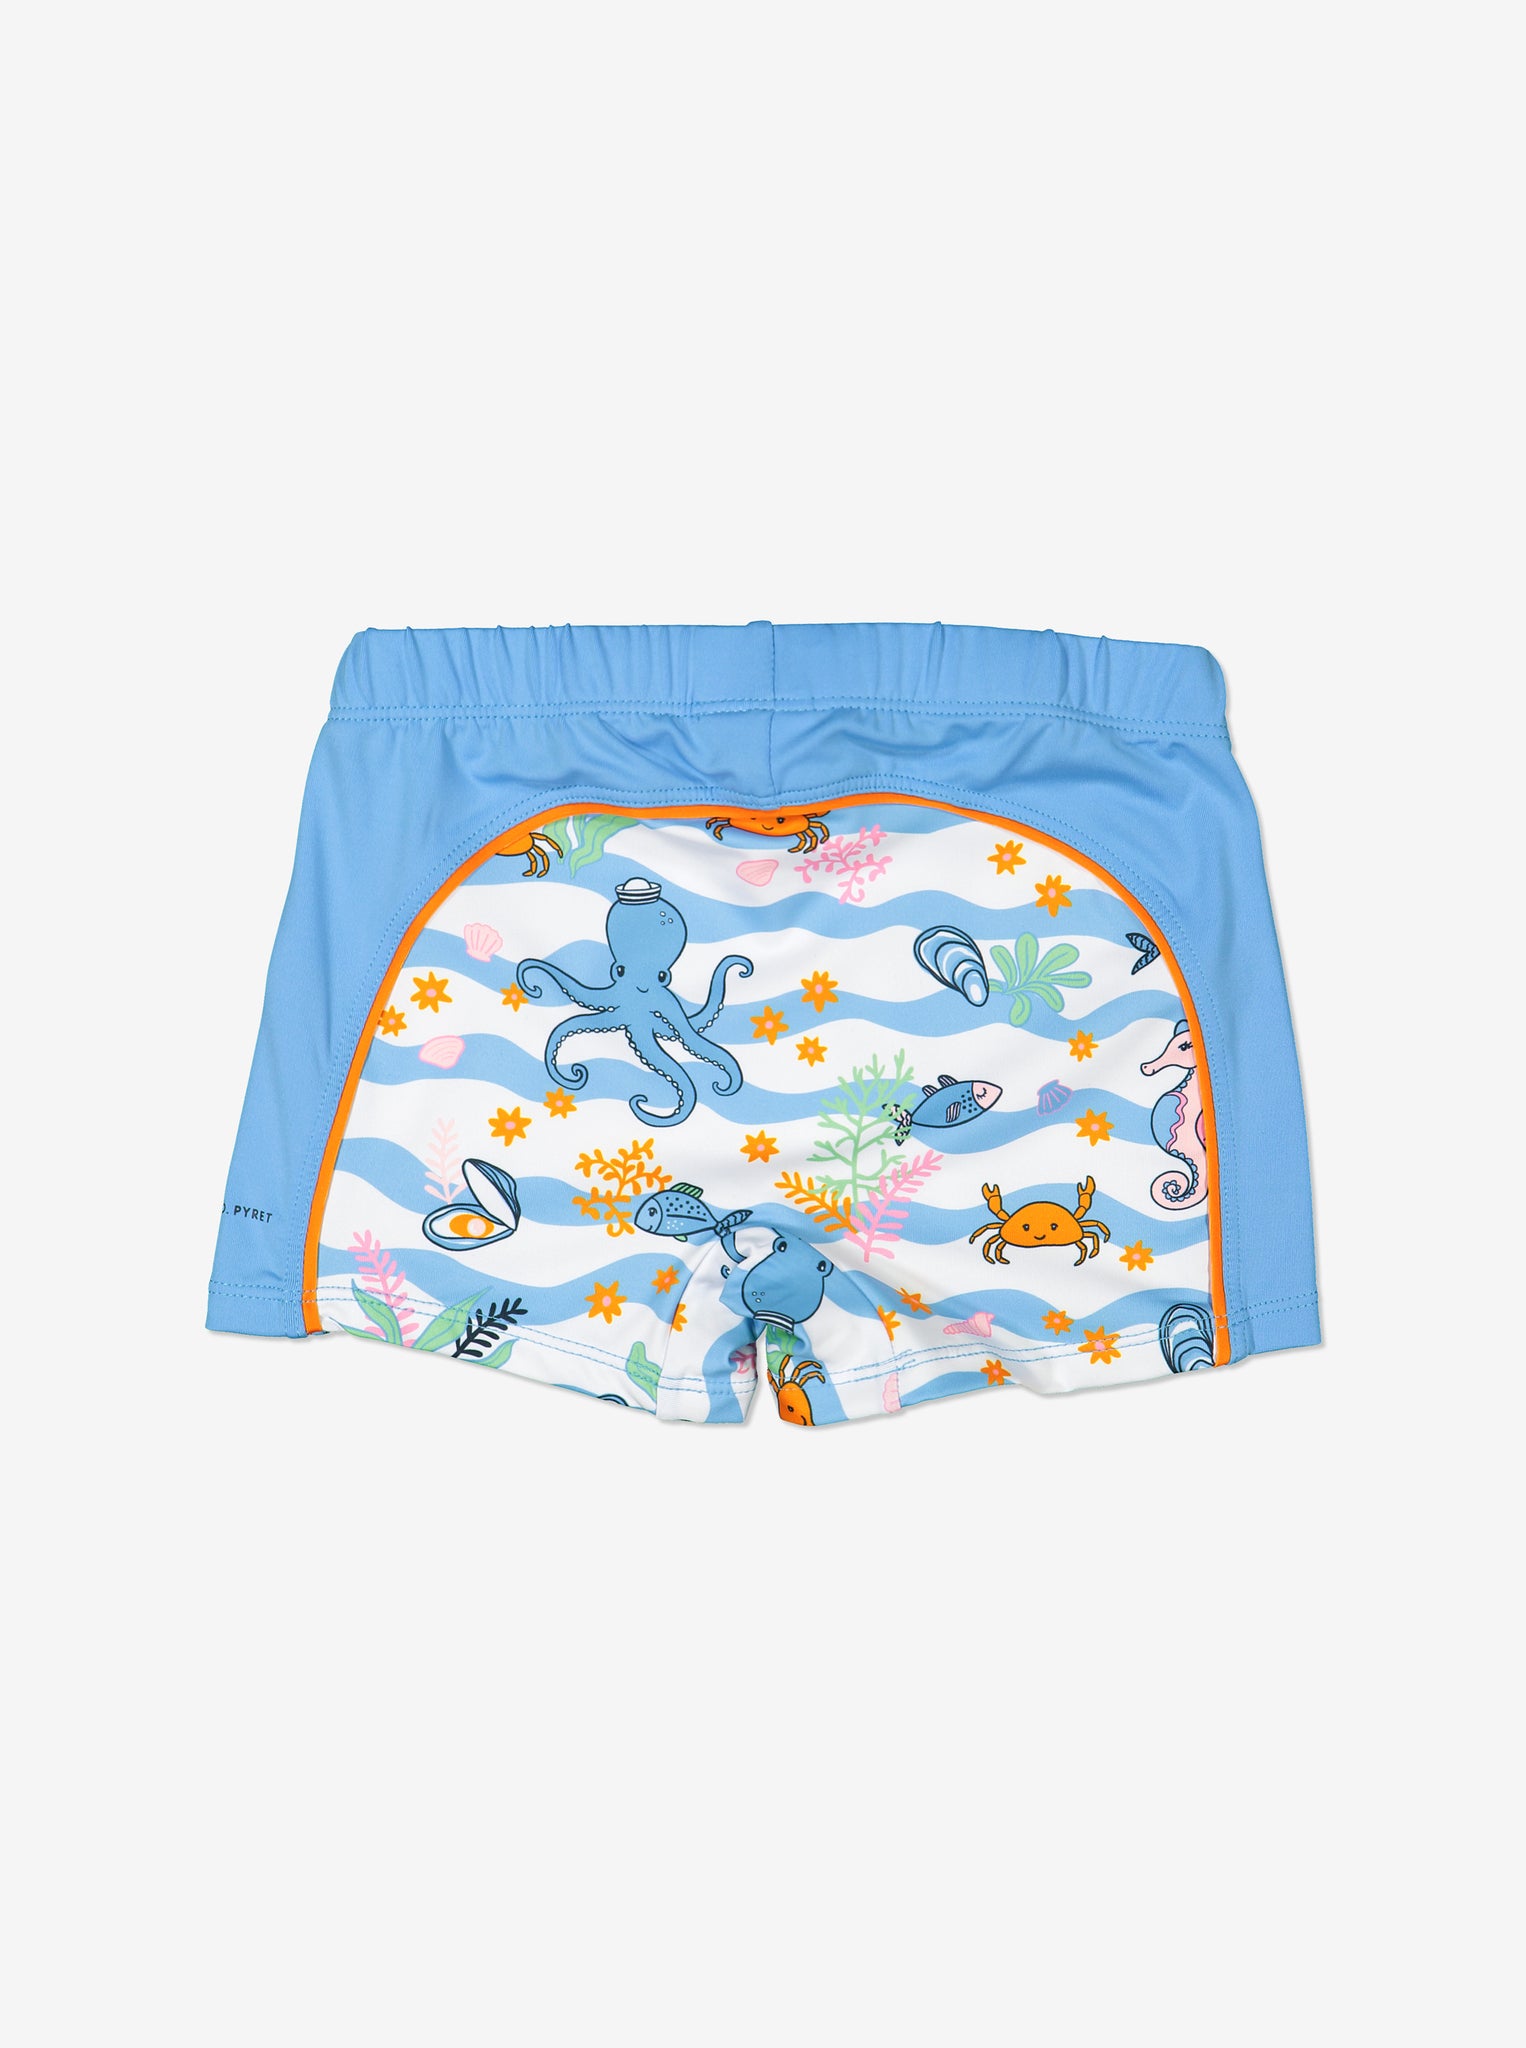 Kids Swim Shorts